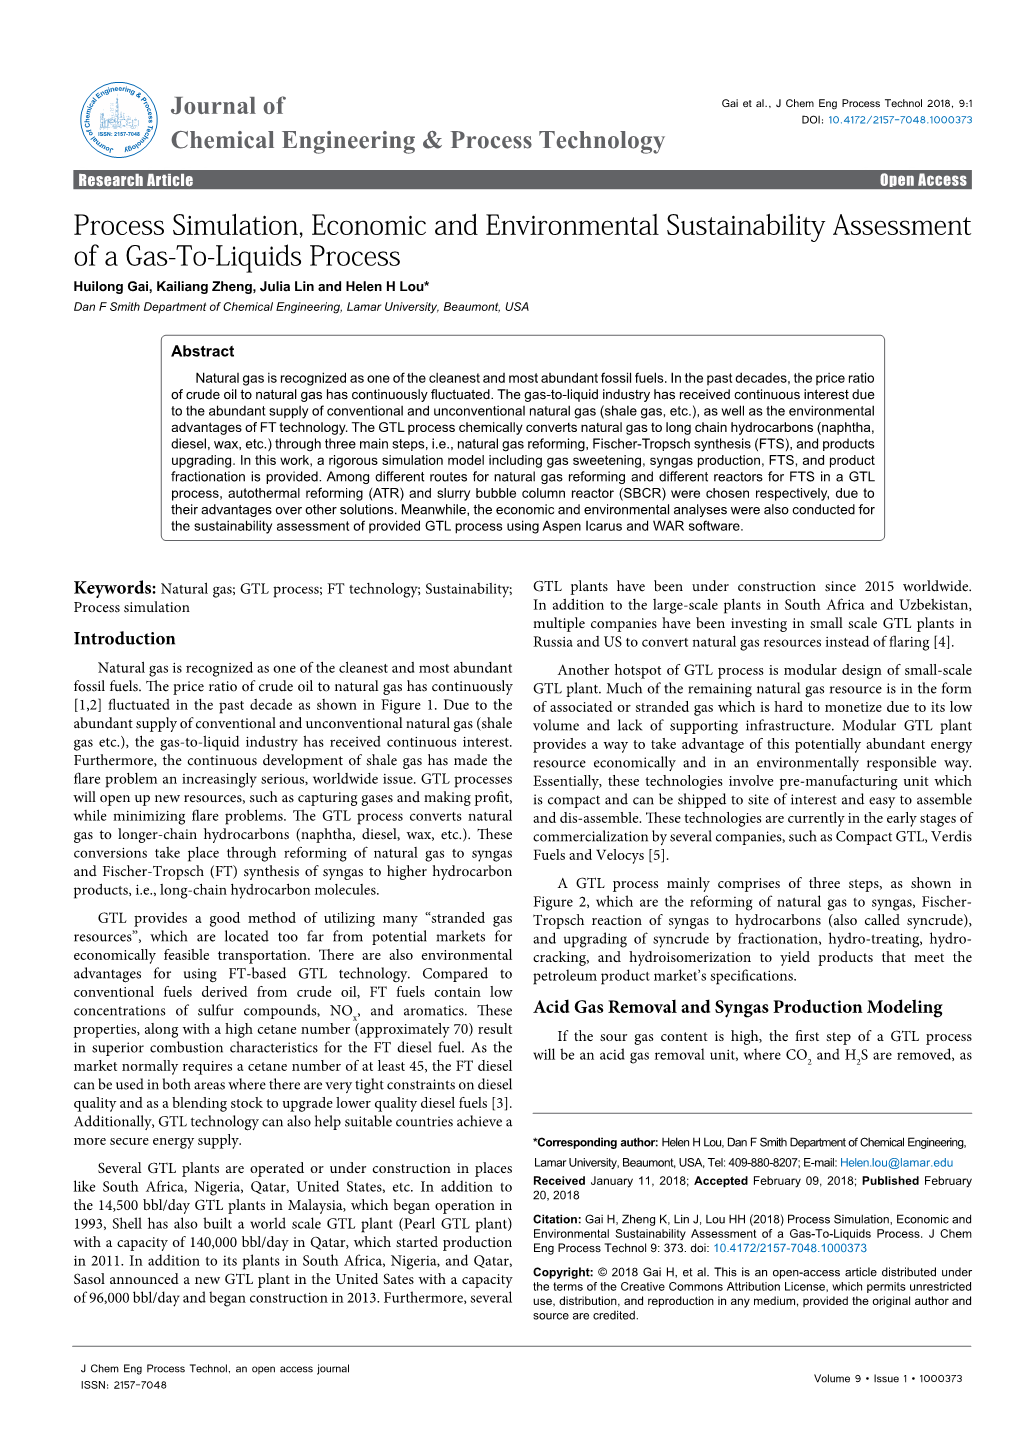 Process Simulation, Economic and Environmental Sustainability